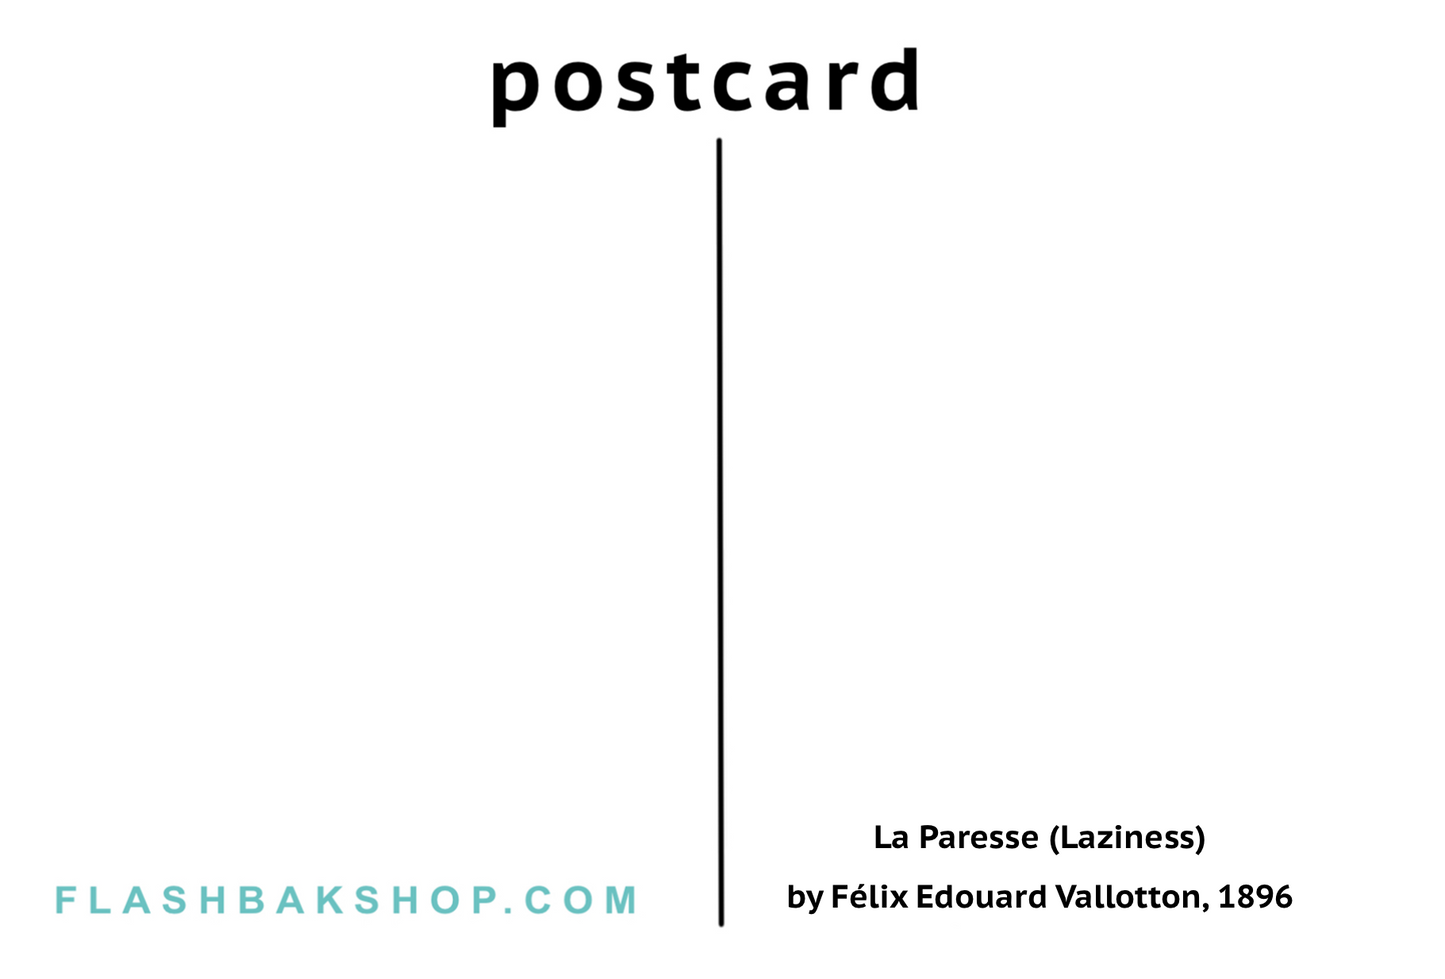 La Paresse (Laziness) by Félix Edouard Vallotton, 1896 - Postcard